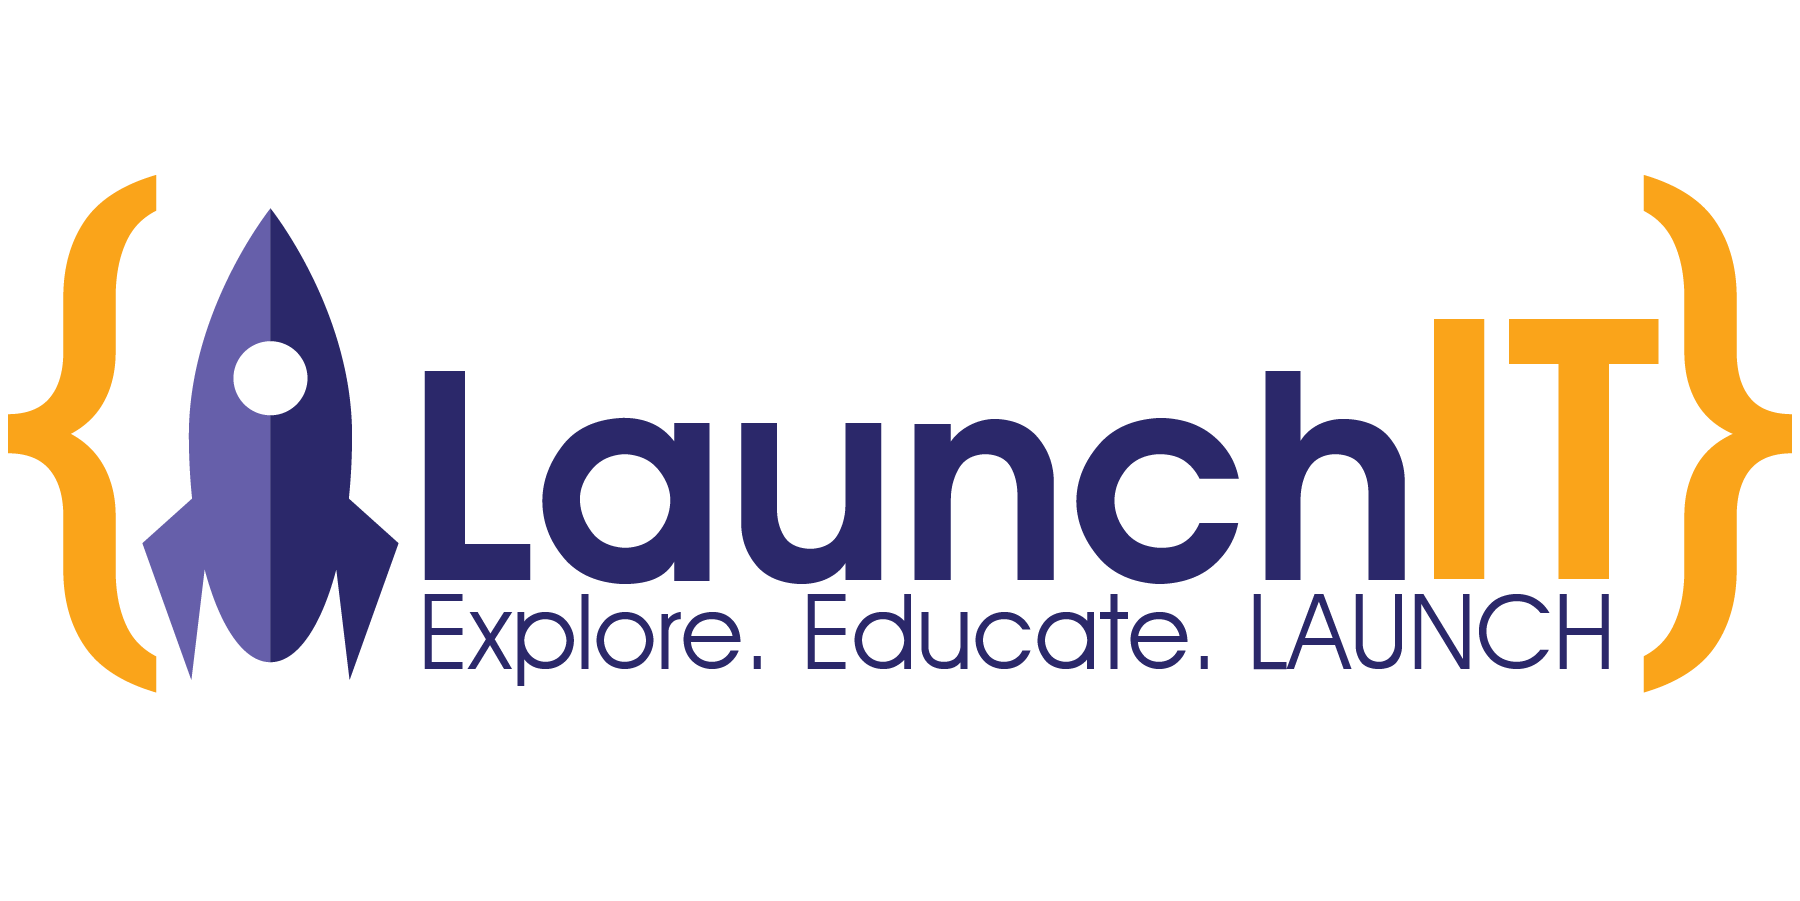 LaunchIT Logo with slogan "Explore. Educate. LAUNCH"